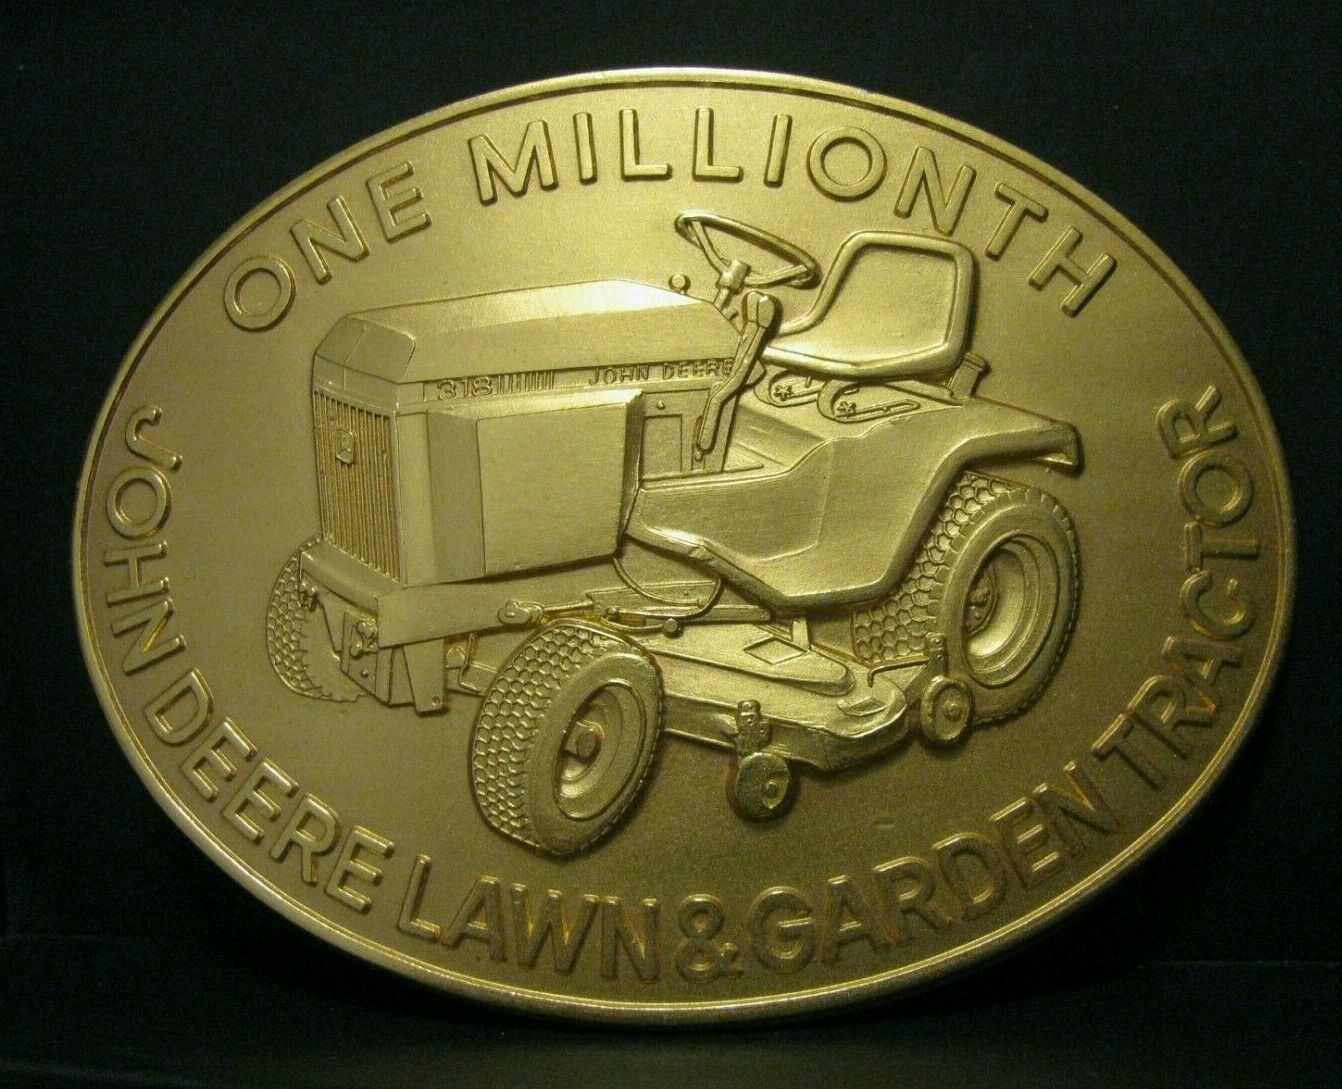 John Deere Horicon 318 Lawn Garden Tractor Gold Belt Buckle One Millionth 1984